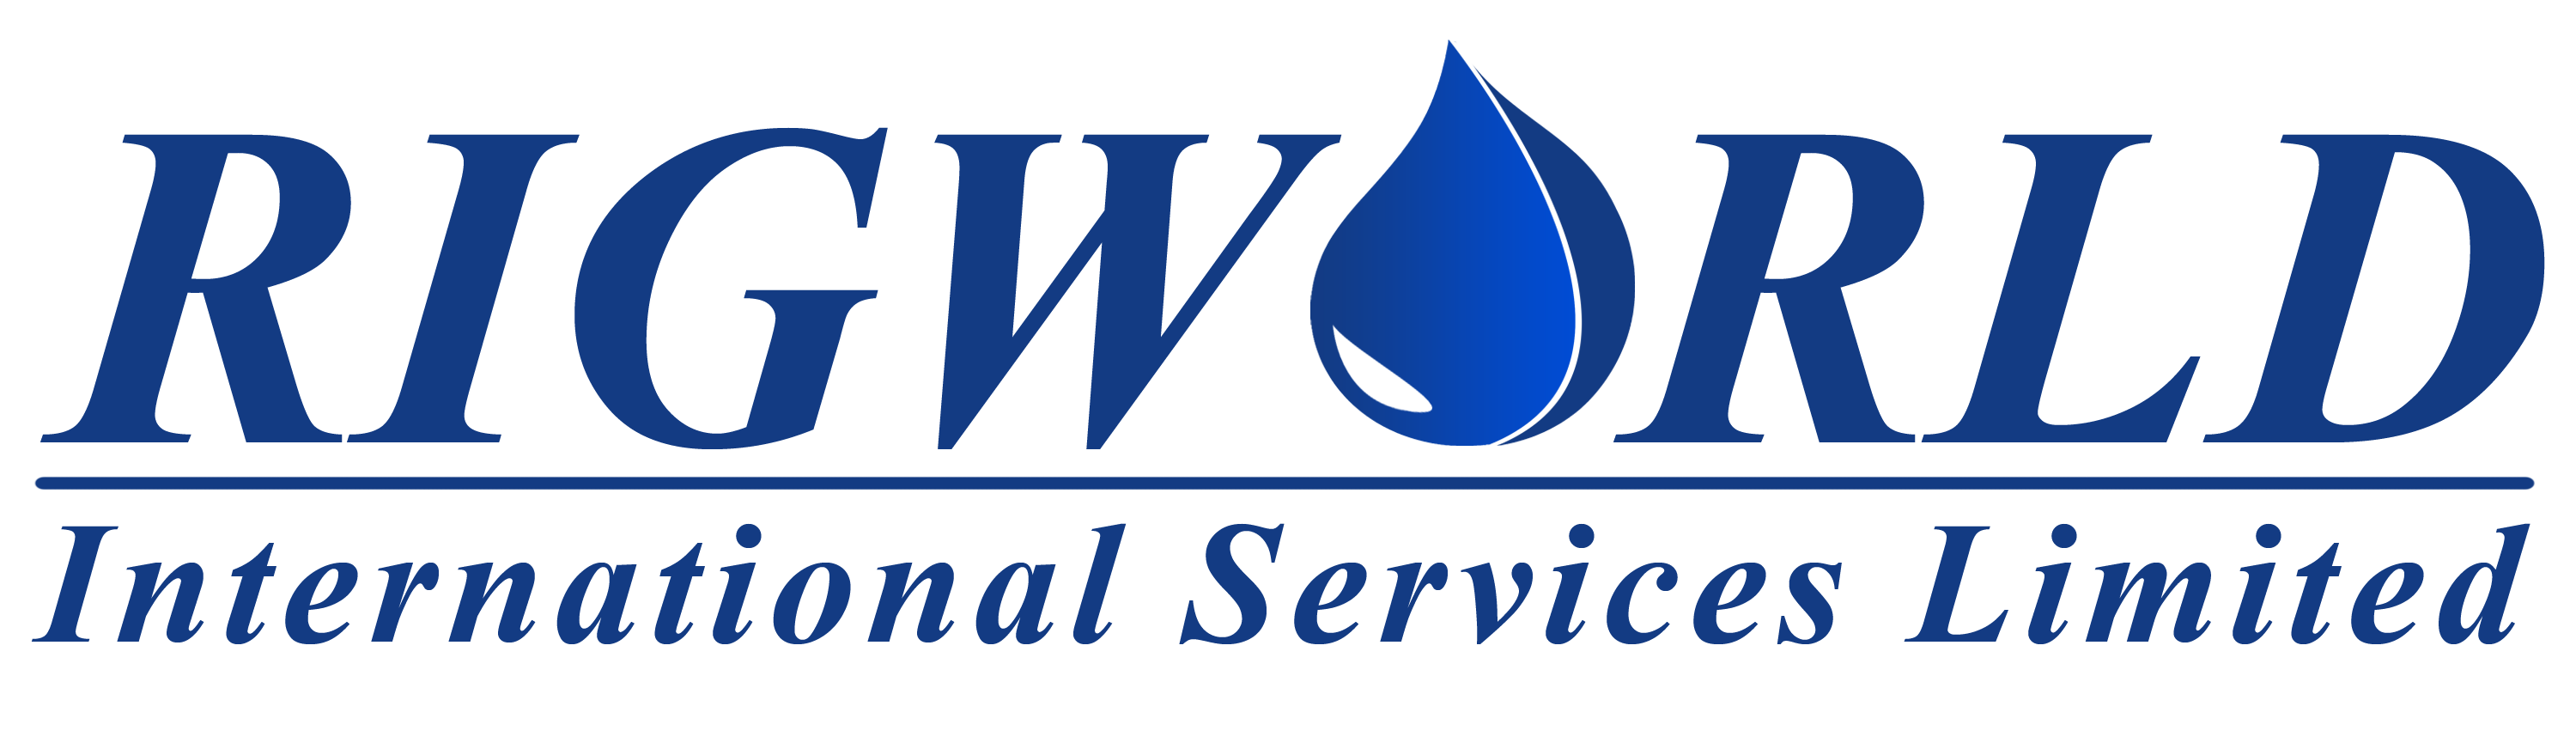 Rigworld International Services Ltd. logo